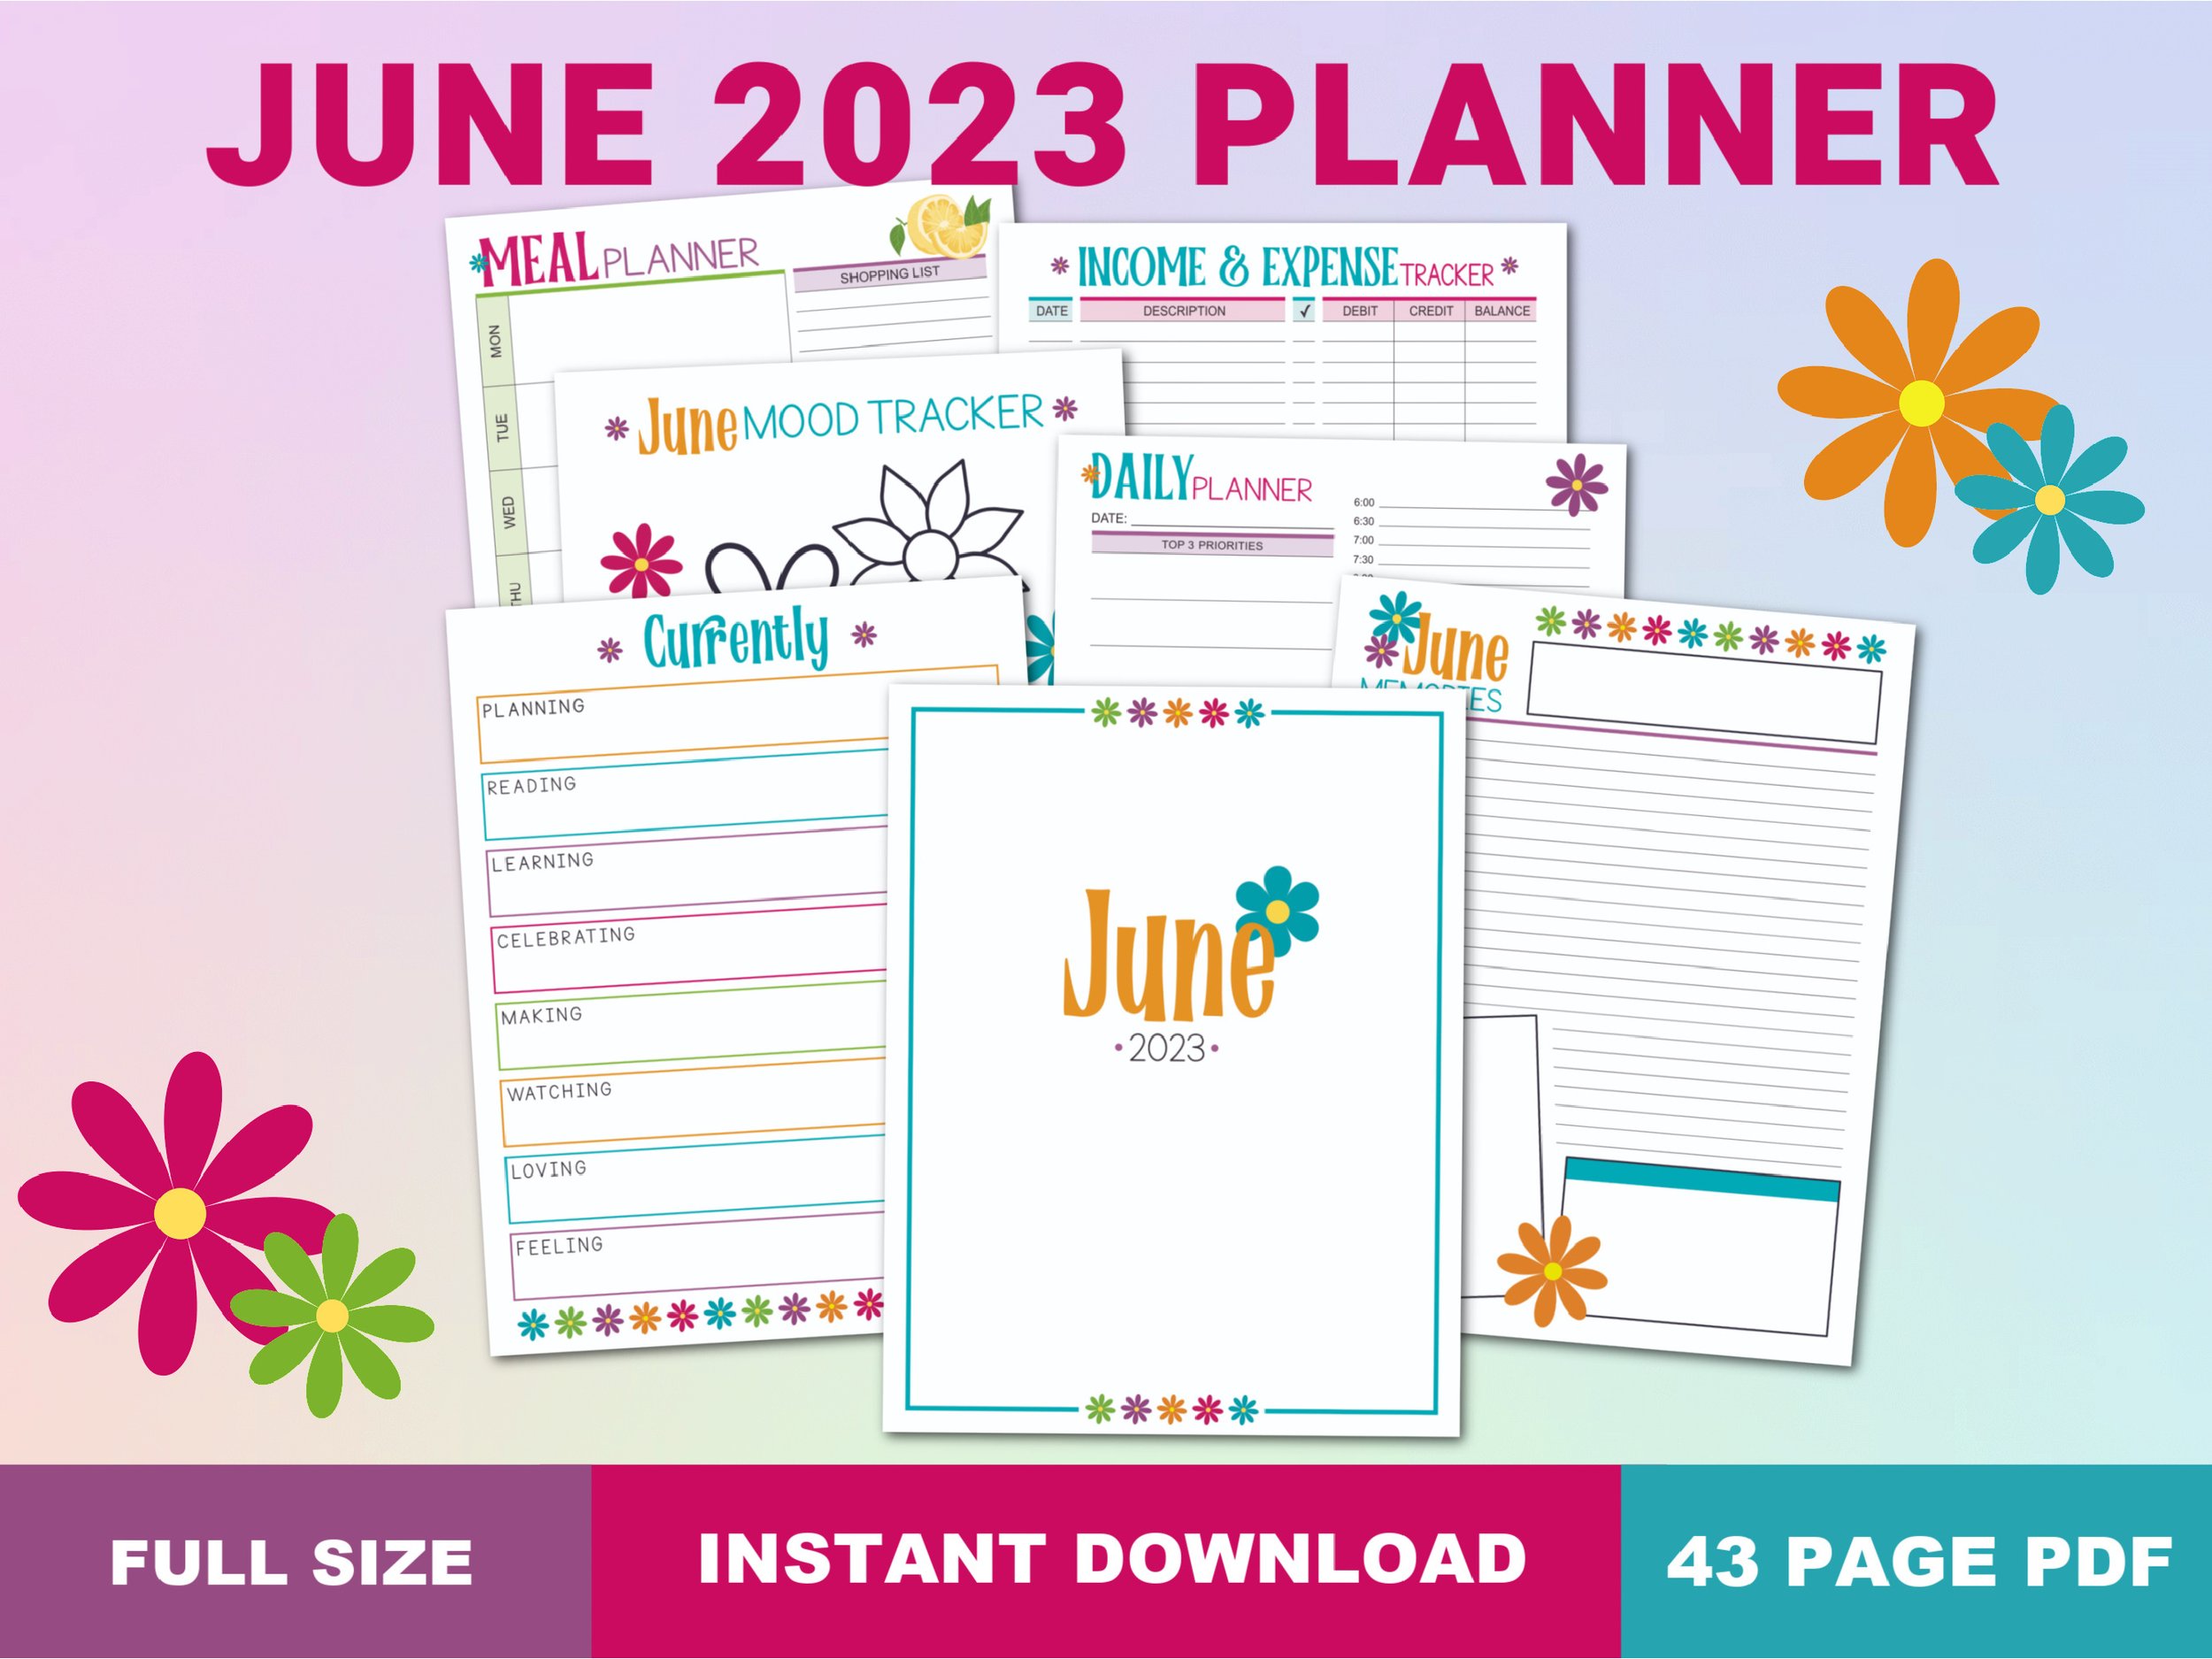 June 2023 Complete Planner-1.jpg